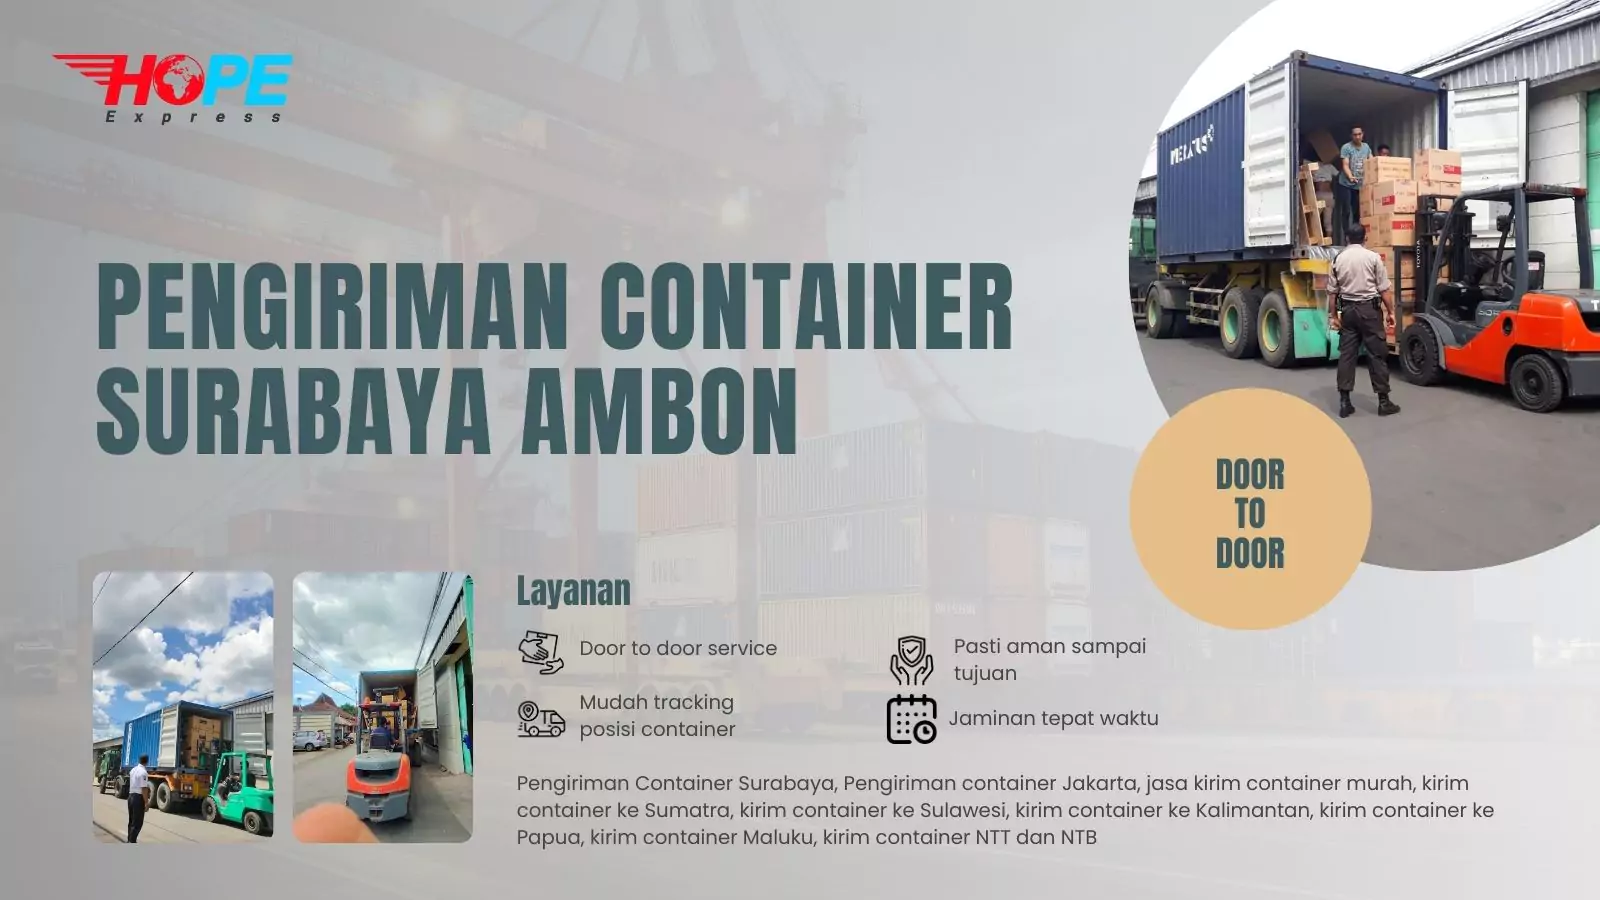 Pengiriman Container Surabaya Ambon